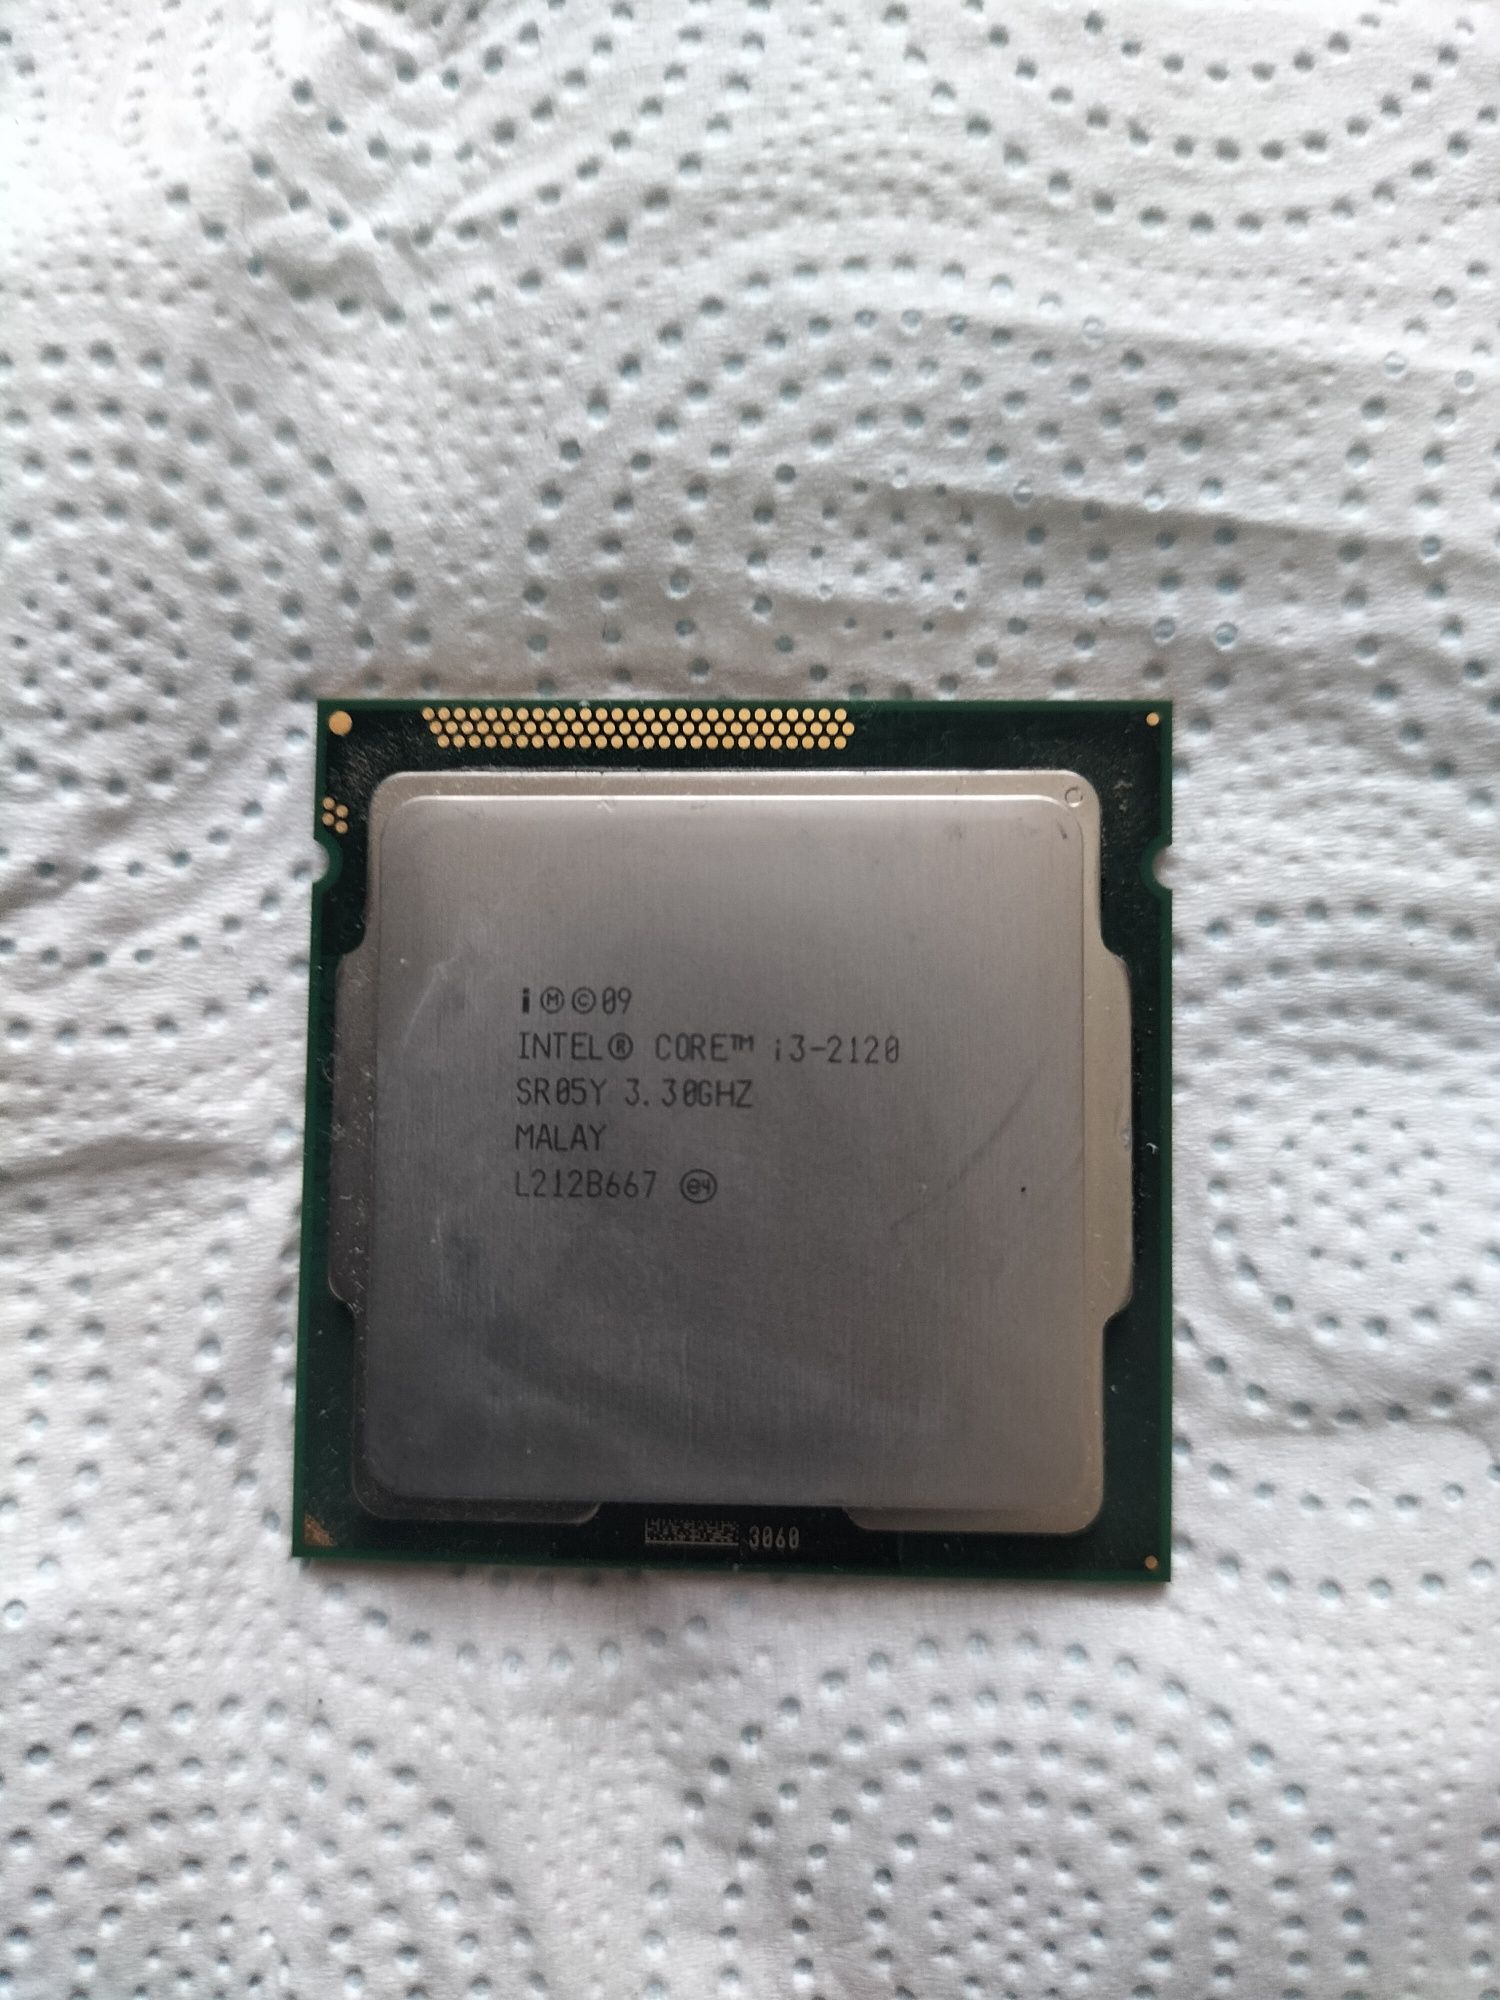 Procesor Intel core i3 2120 3.3 ghz.